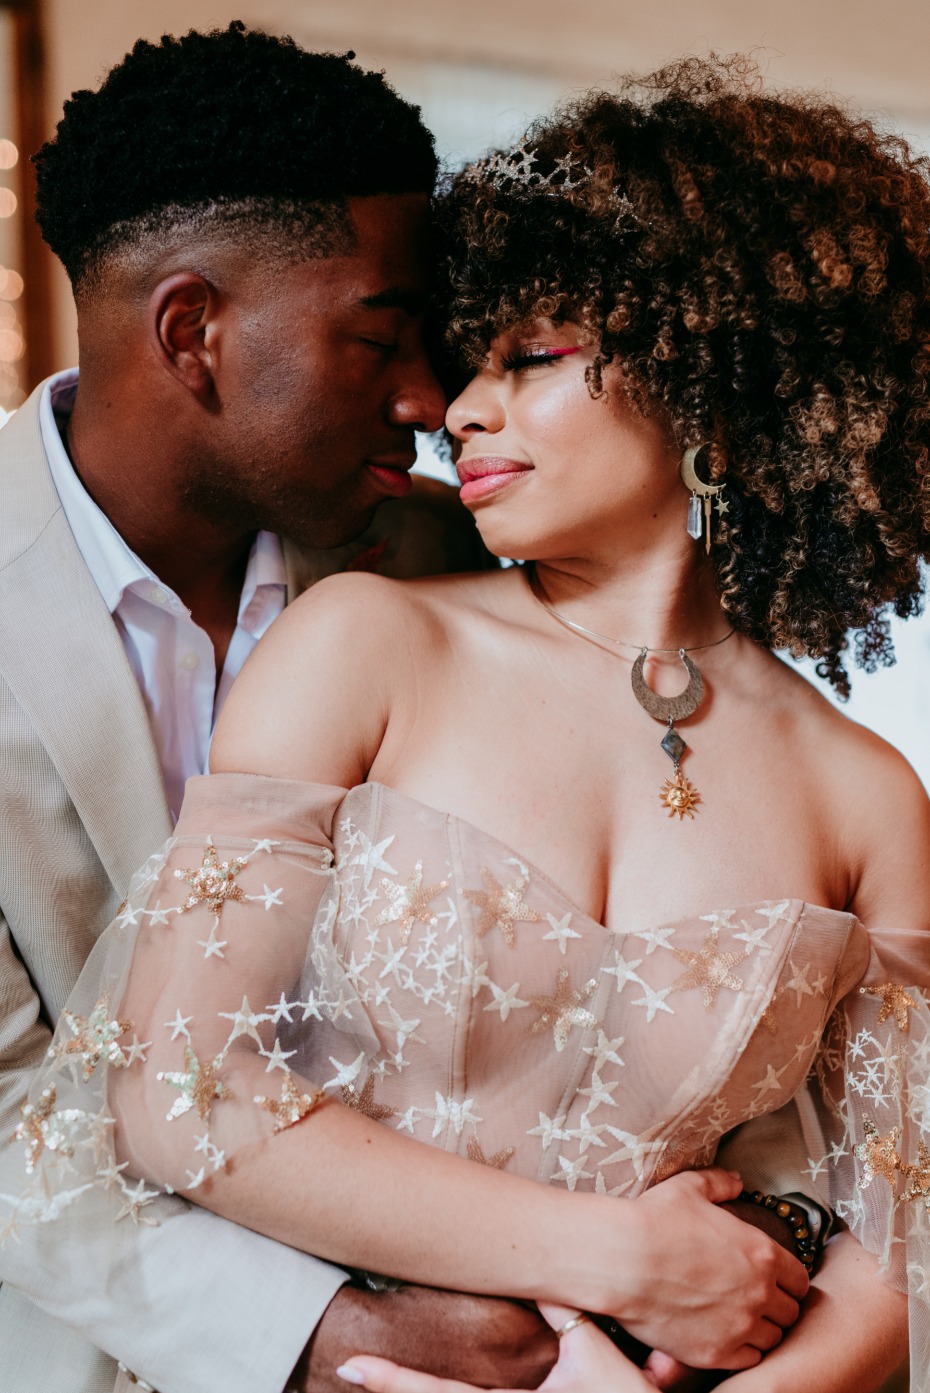 Black Wedding Vendors To Follow Who Inspire